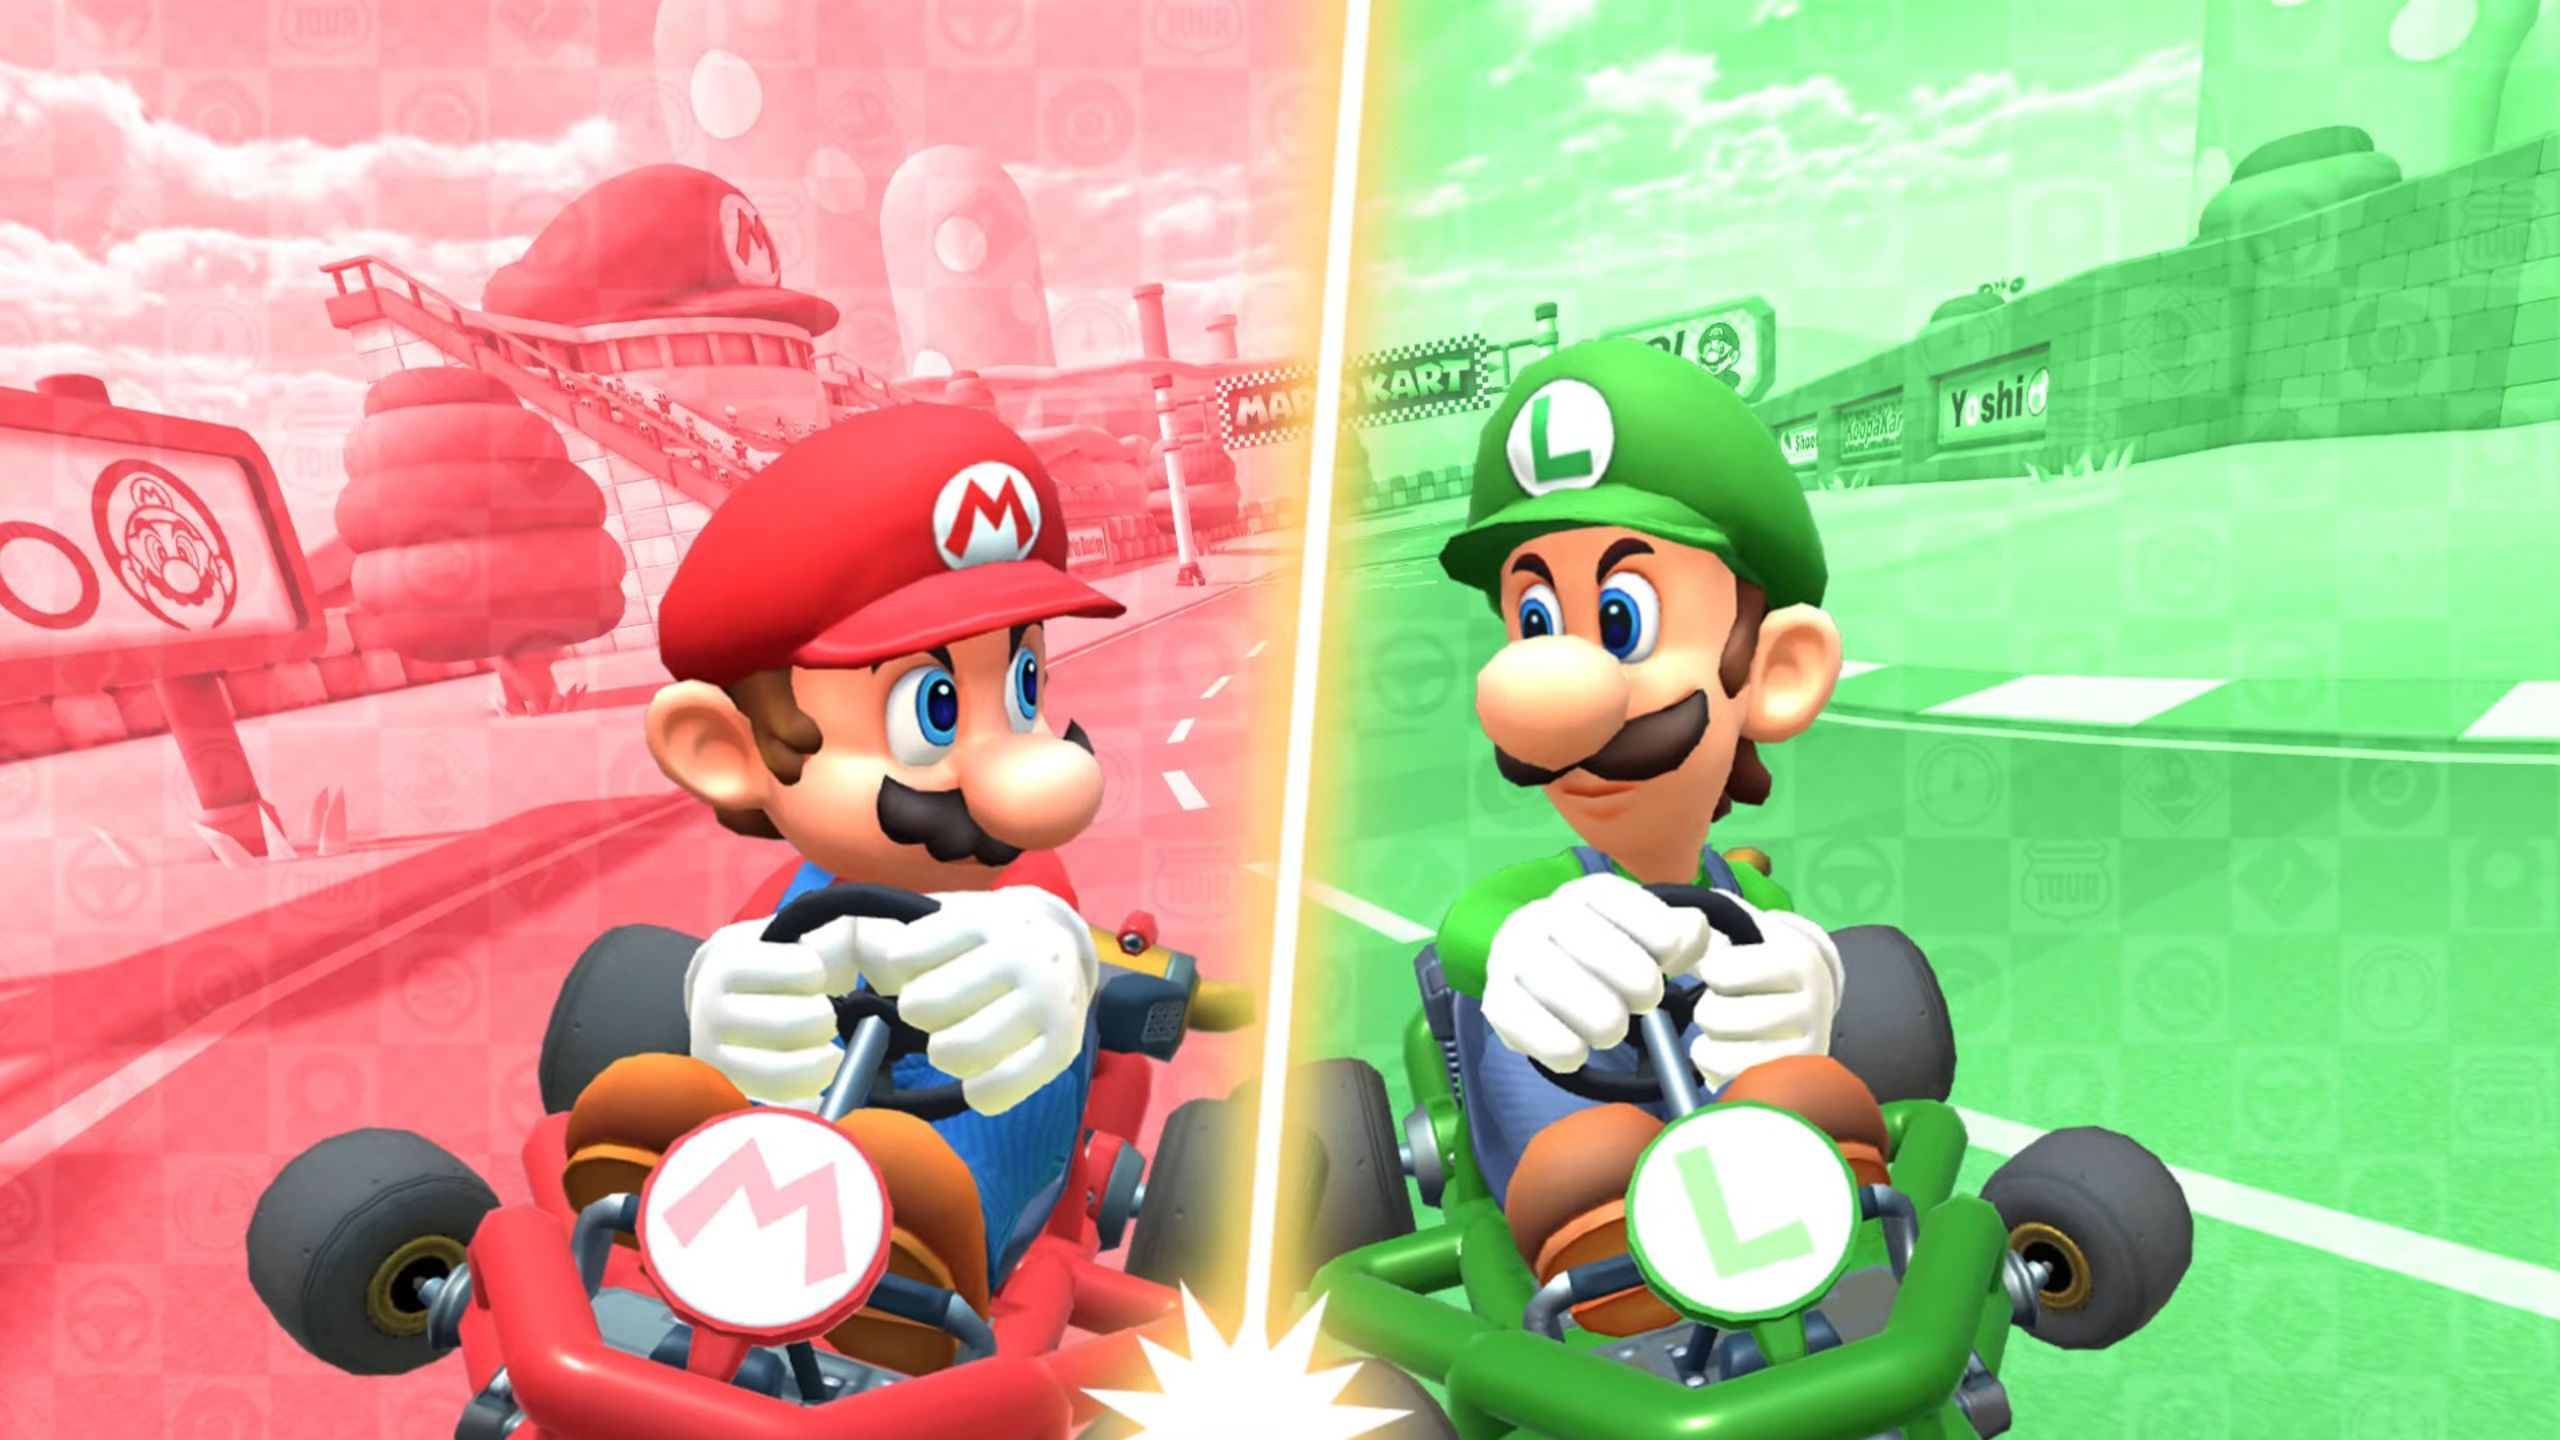 Mario and Luigi racing karts.